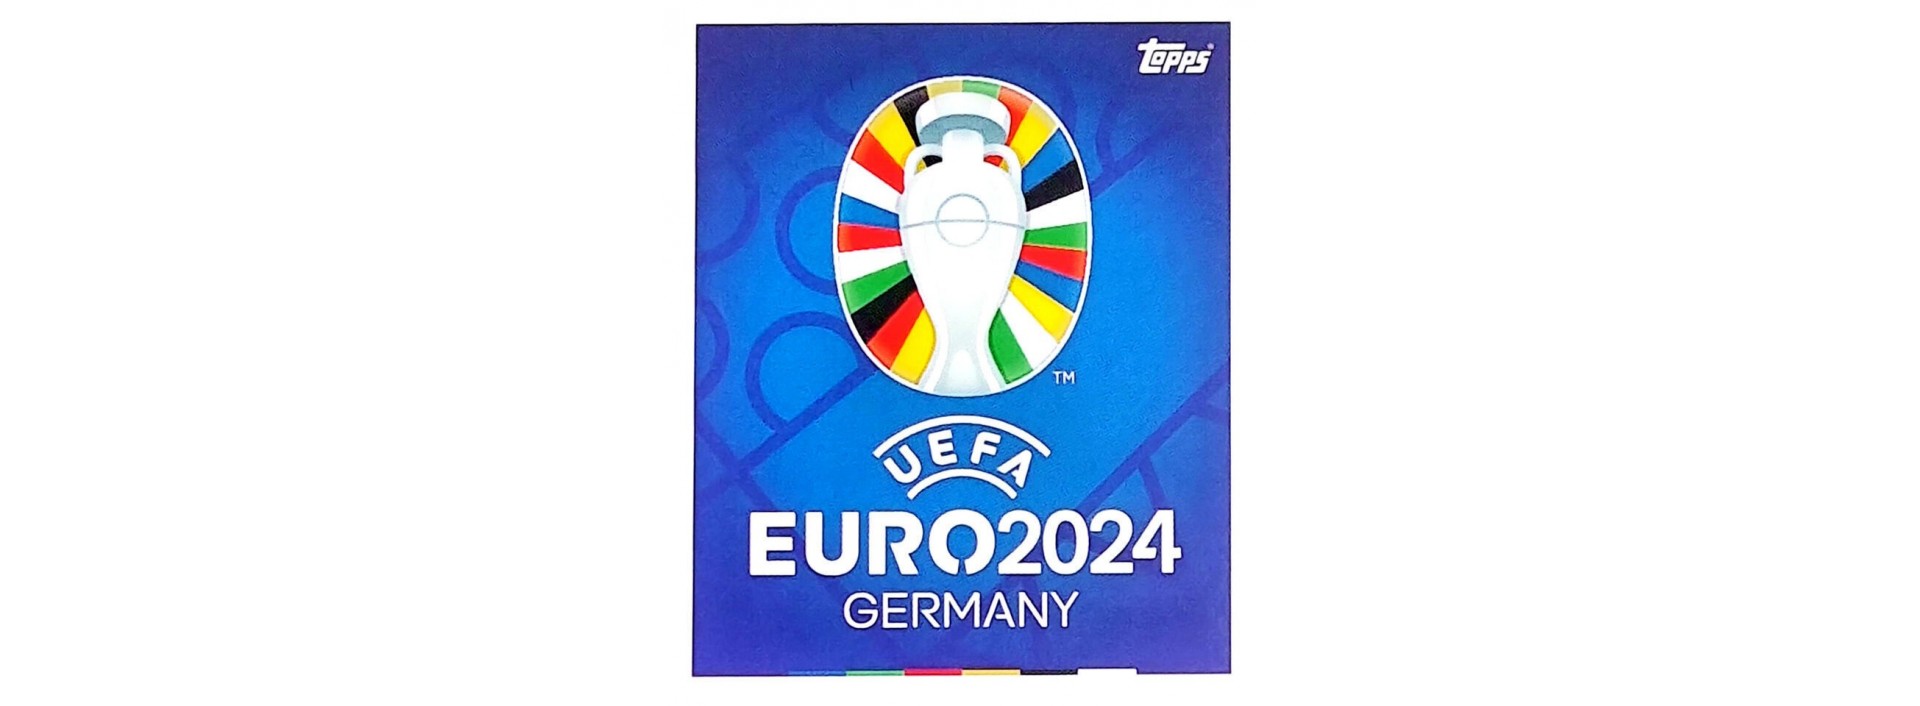 UEFA Y EURO